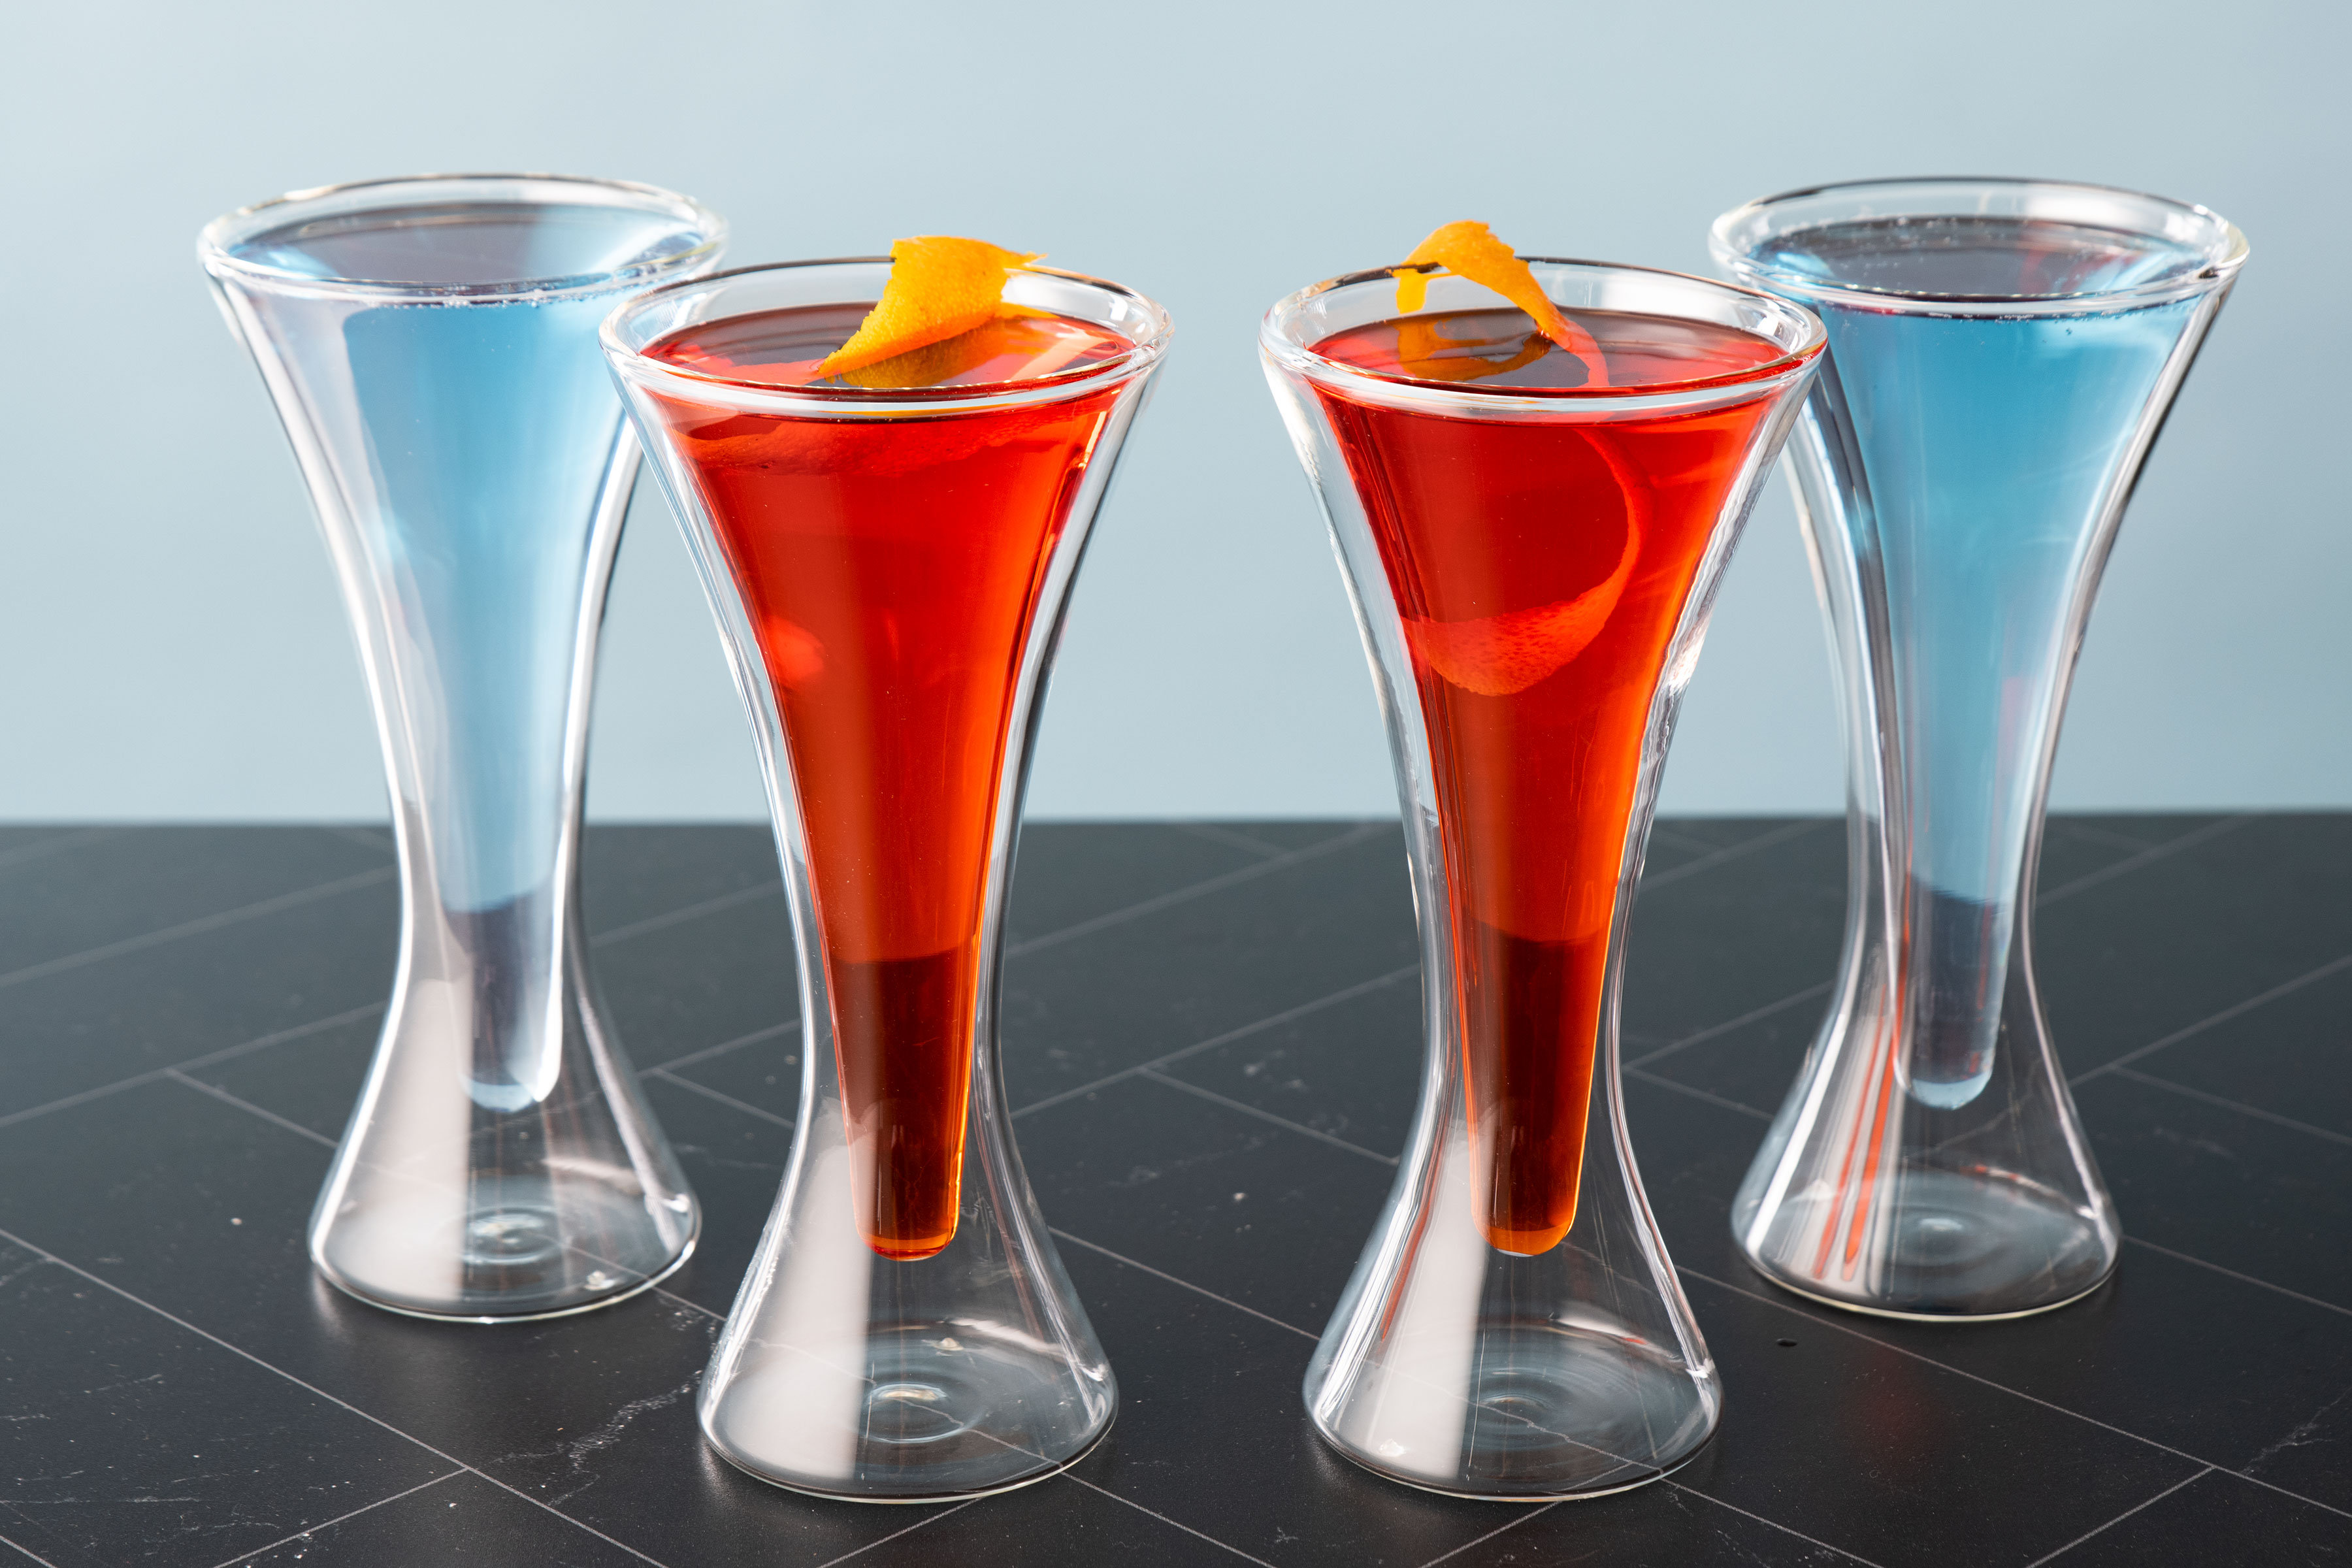 LAV Martini Glasses Set of 6 - Multi colored Martini Cocktail Glasses 6 oz